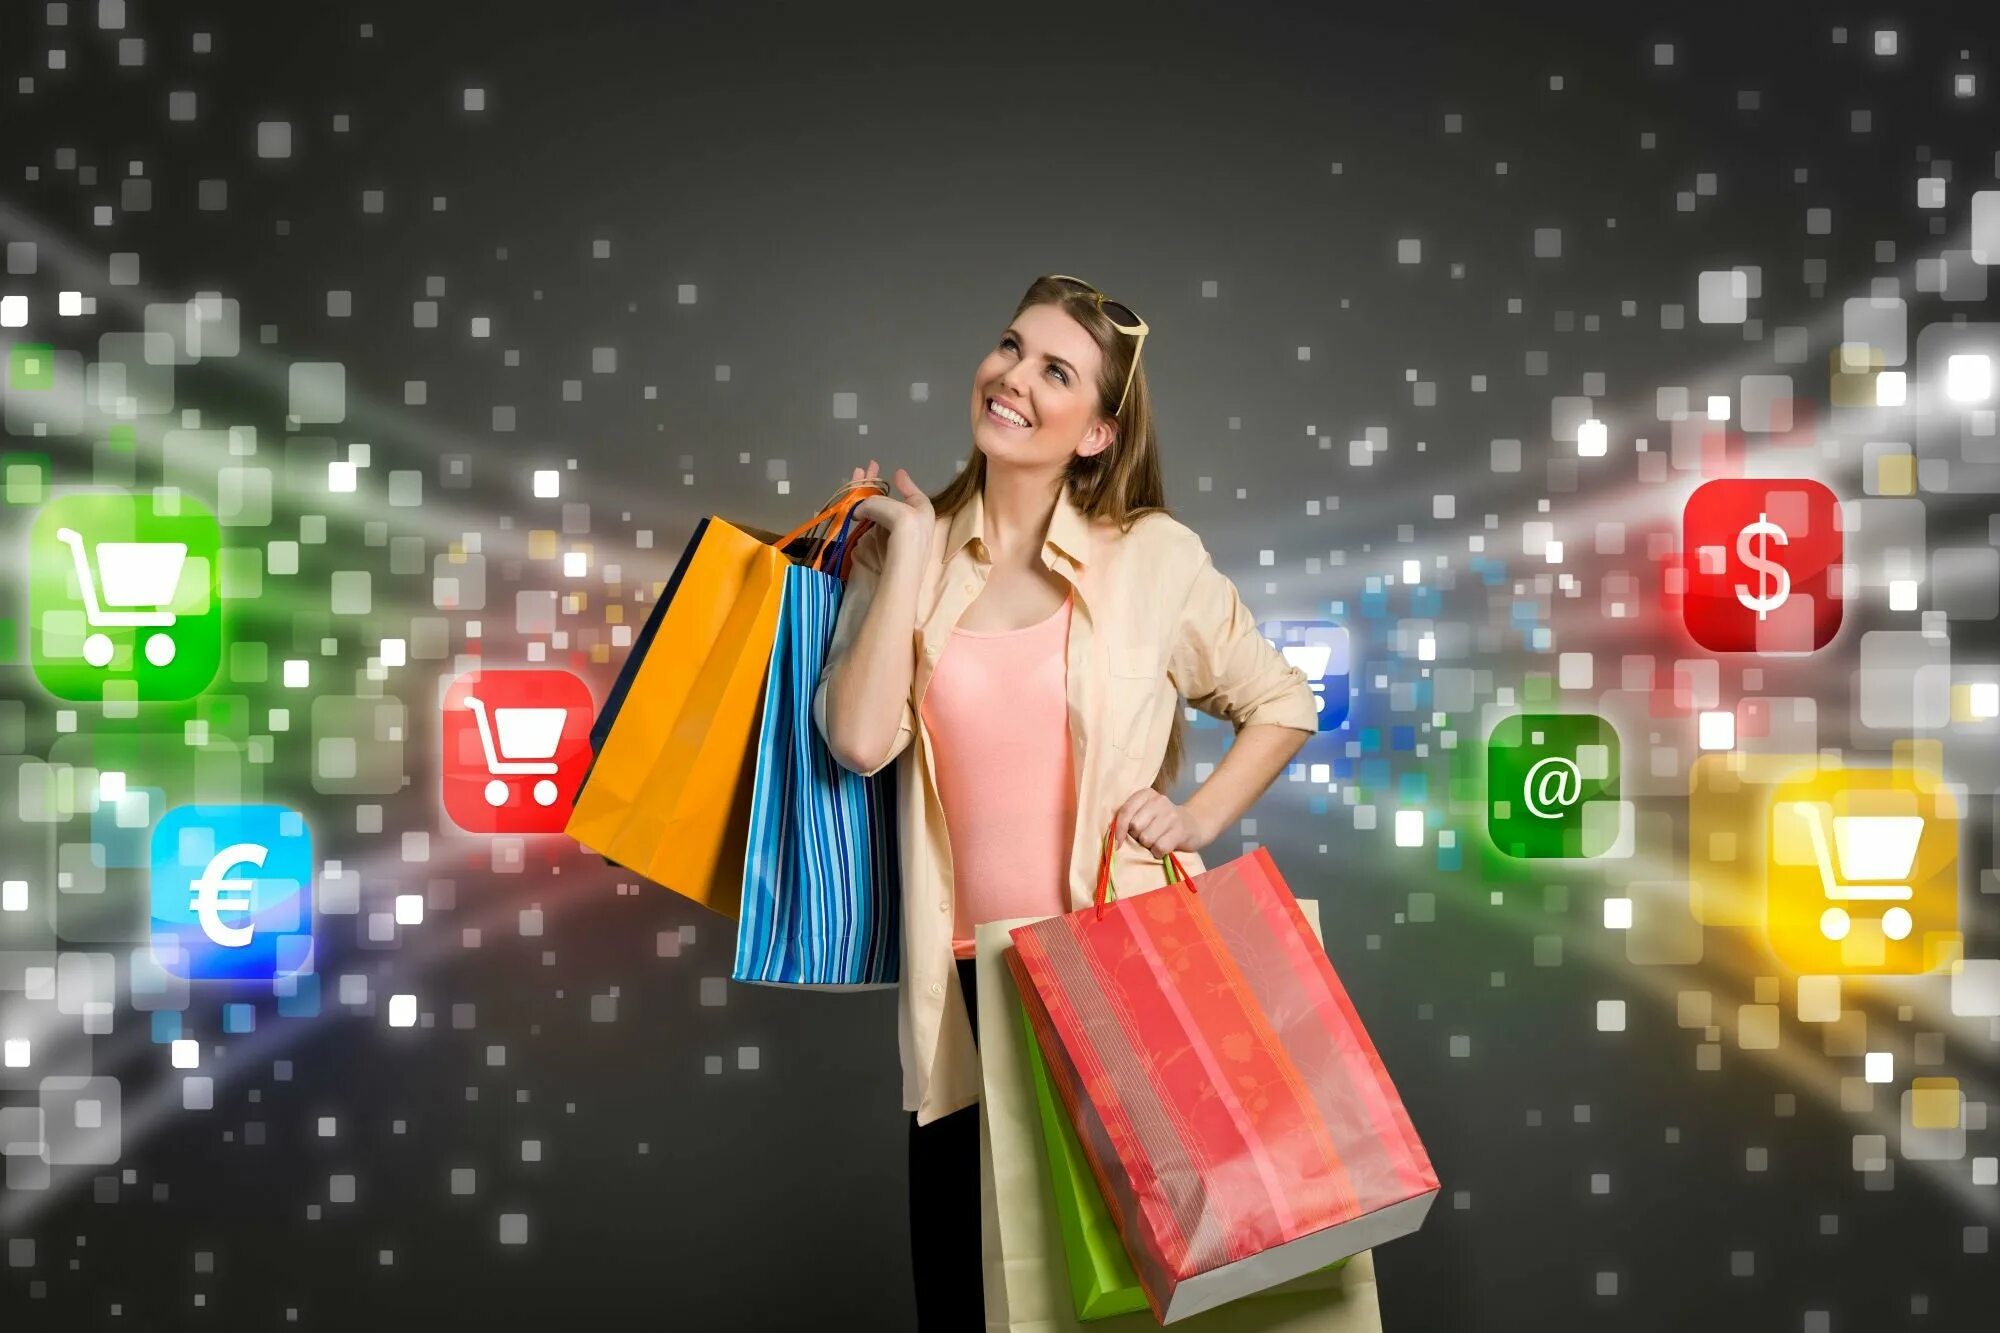 A shopping product is. Покупки в интернете. Интернет шоппинг. Обложка для интернет магазина. Картинки для интернет магазина.